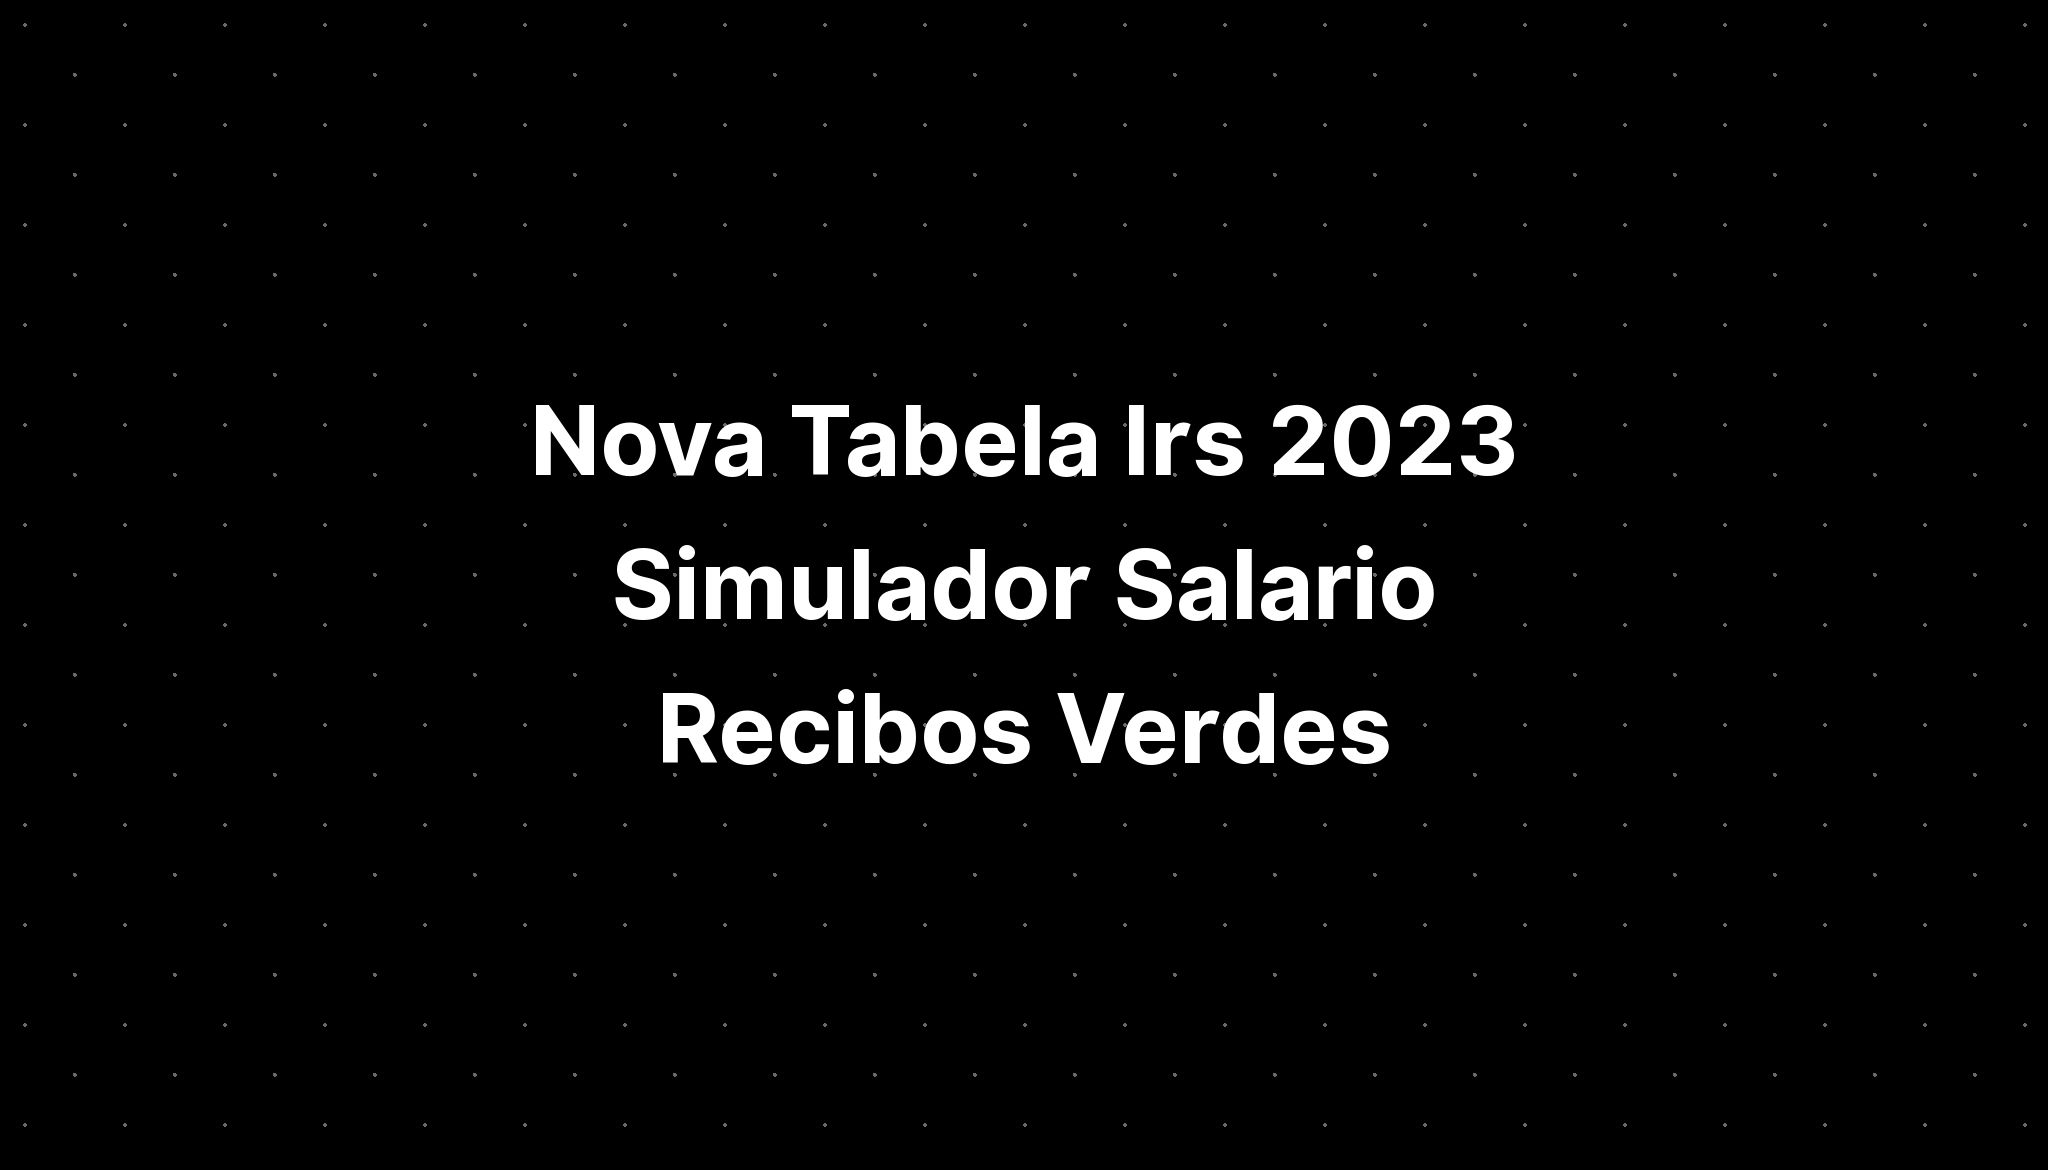 Nova Tabela Irs 2023 Simulador Salario Recibos Verdes 2539